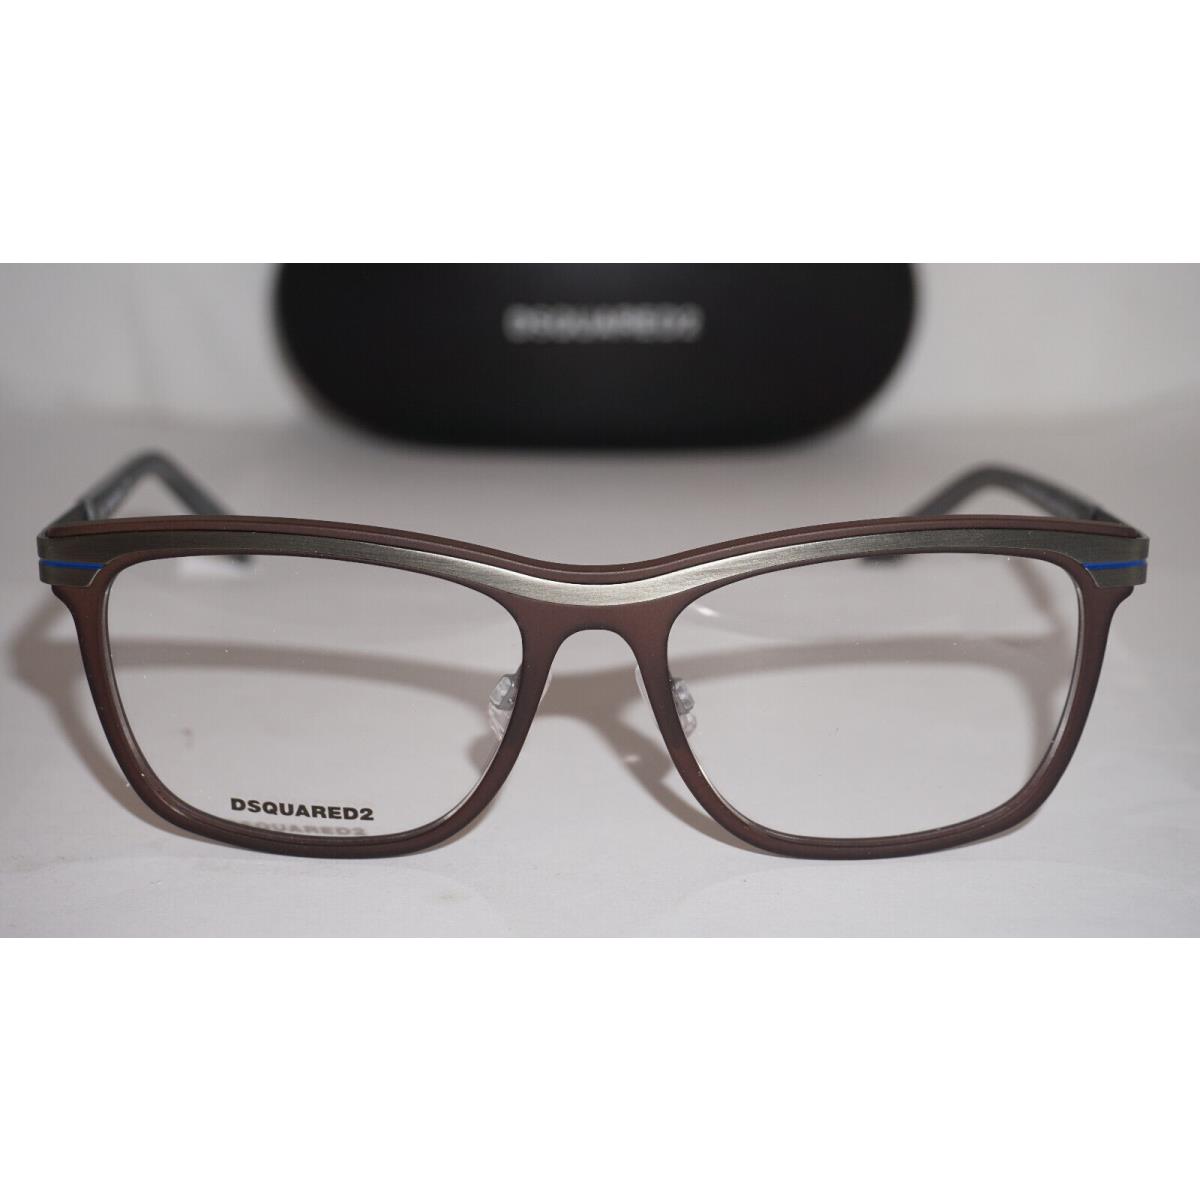 DSQUARED2 Eyeglasses Munich Brown Metal DQ5176 046 53 16 140